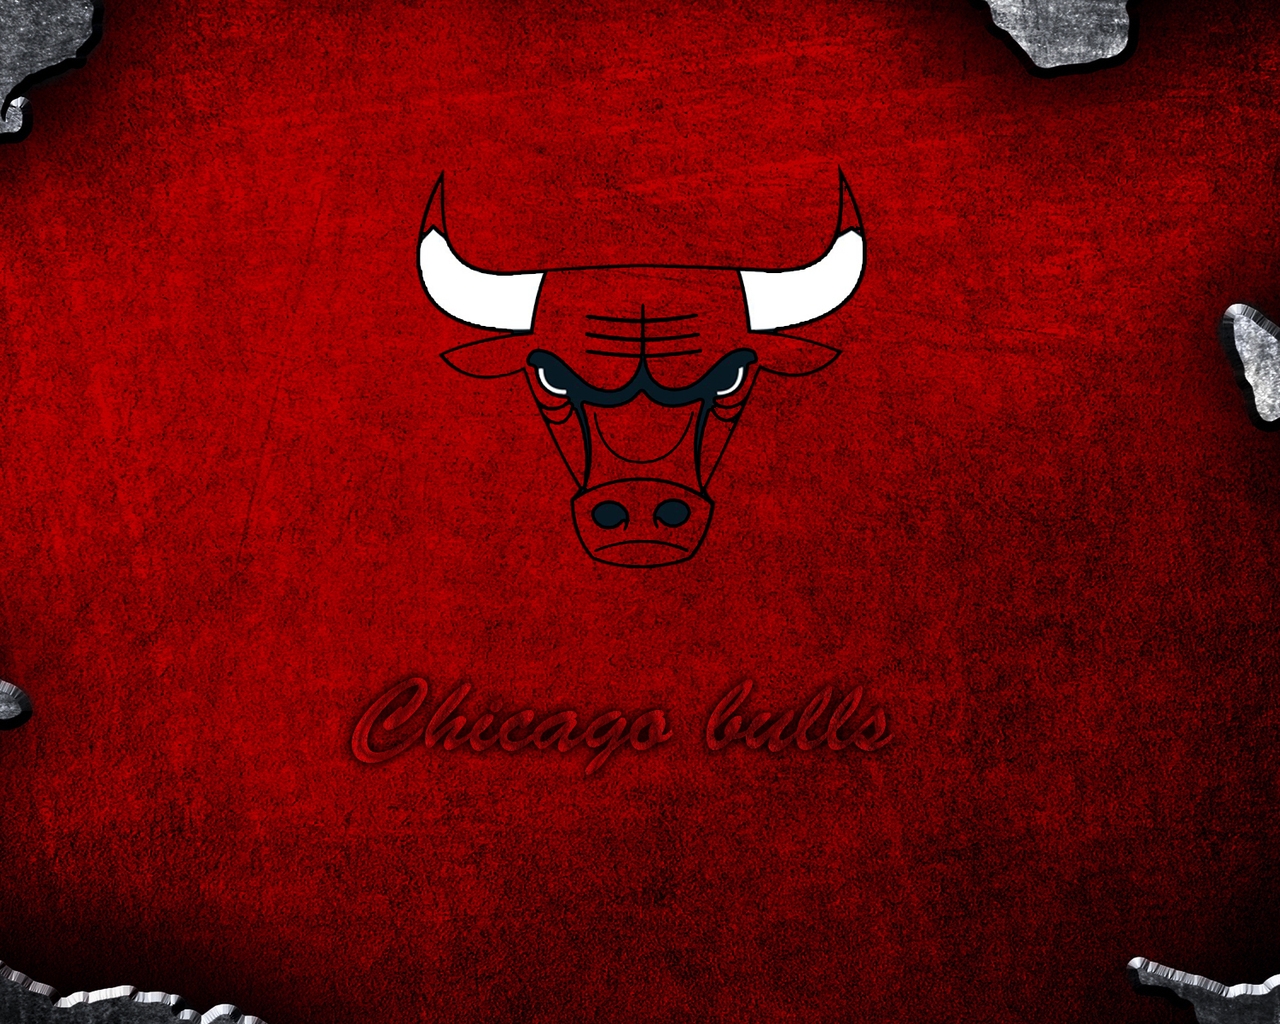 Chicago Bulls Grunge for 1280 x 1024 resolution